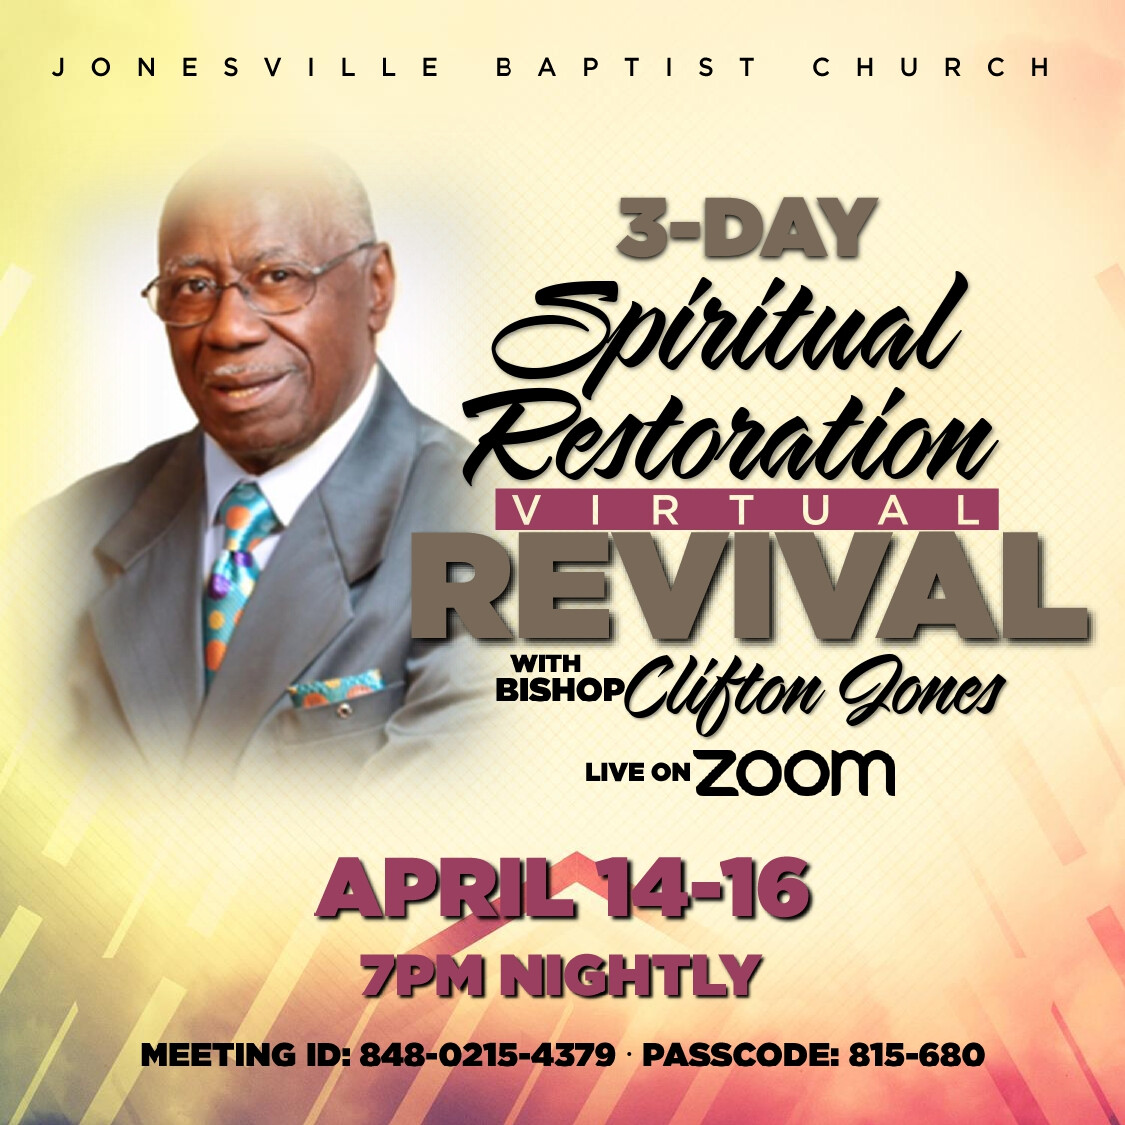 Spiritual Restoration Revival